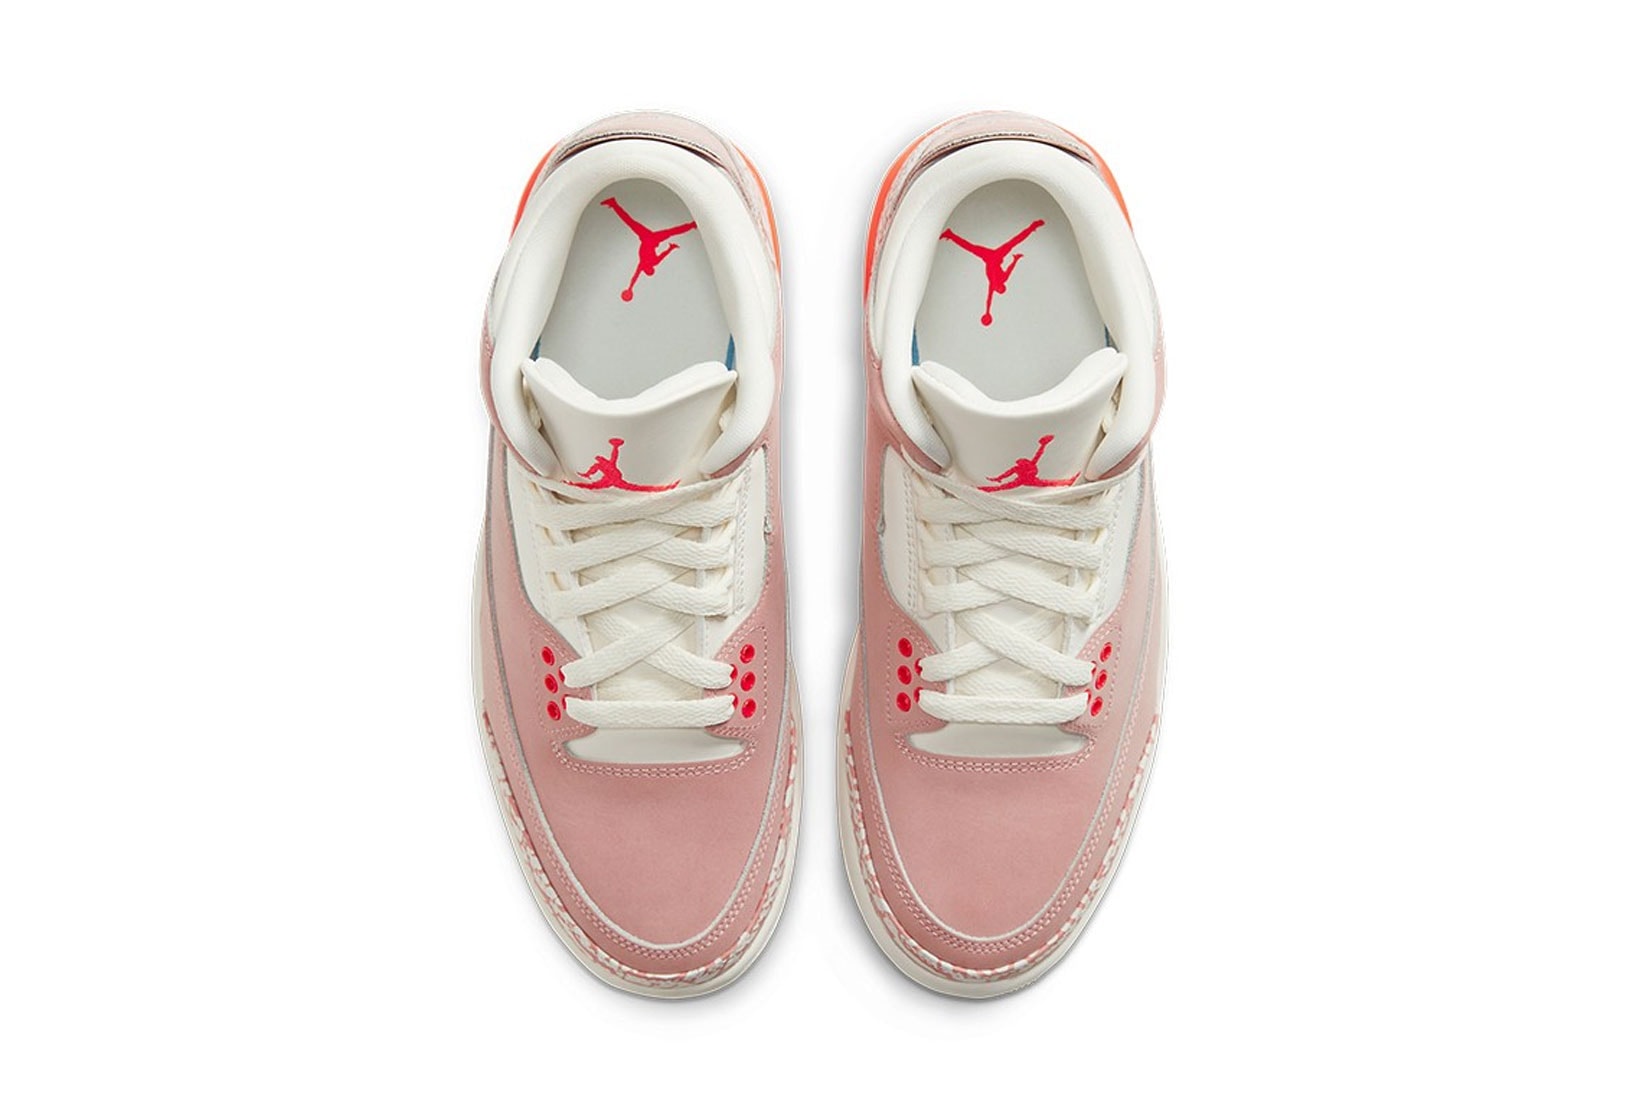 nike air jordan 3 aj3 rust pink womens sneakers top view white sail jumpman logo footbed insole tongue